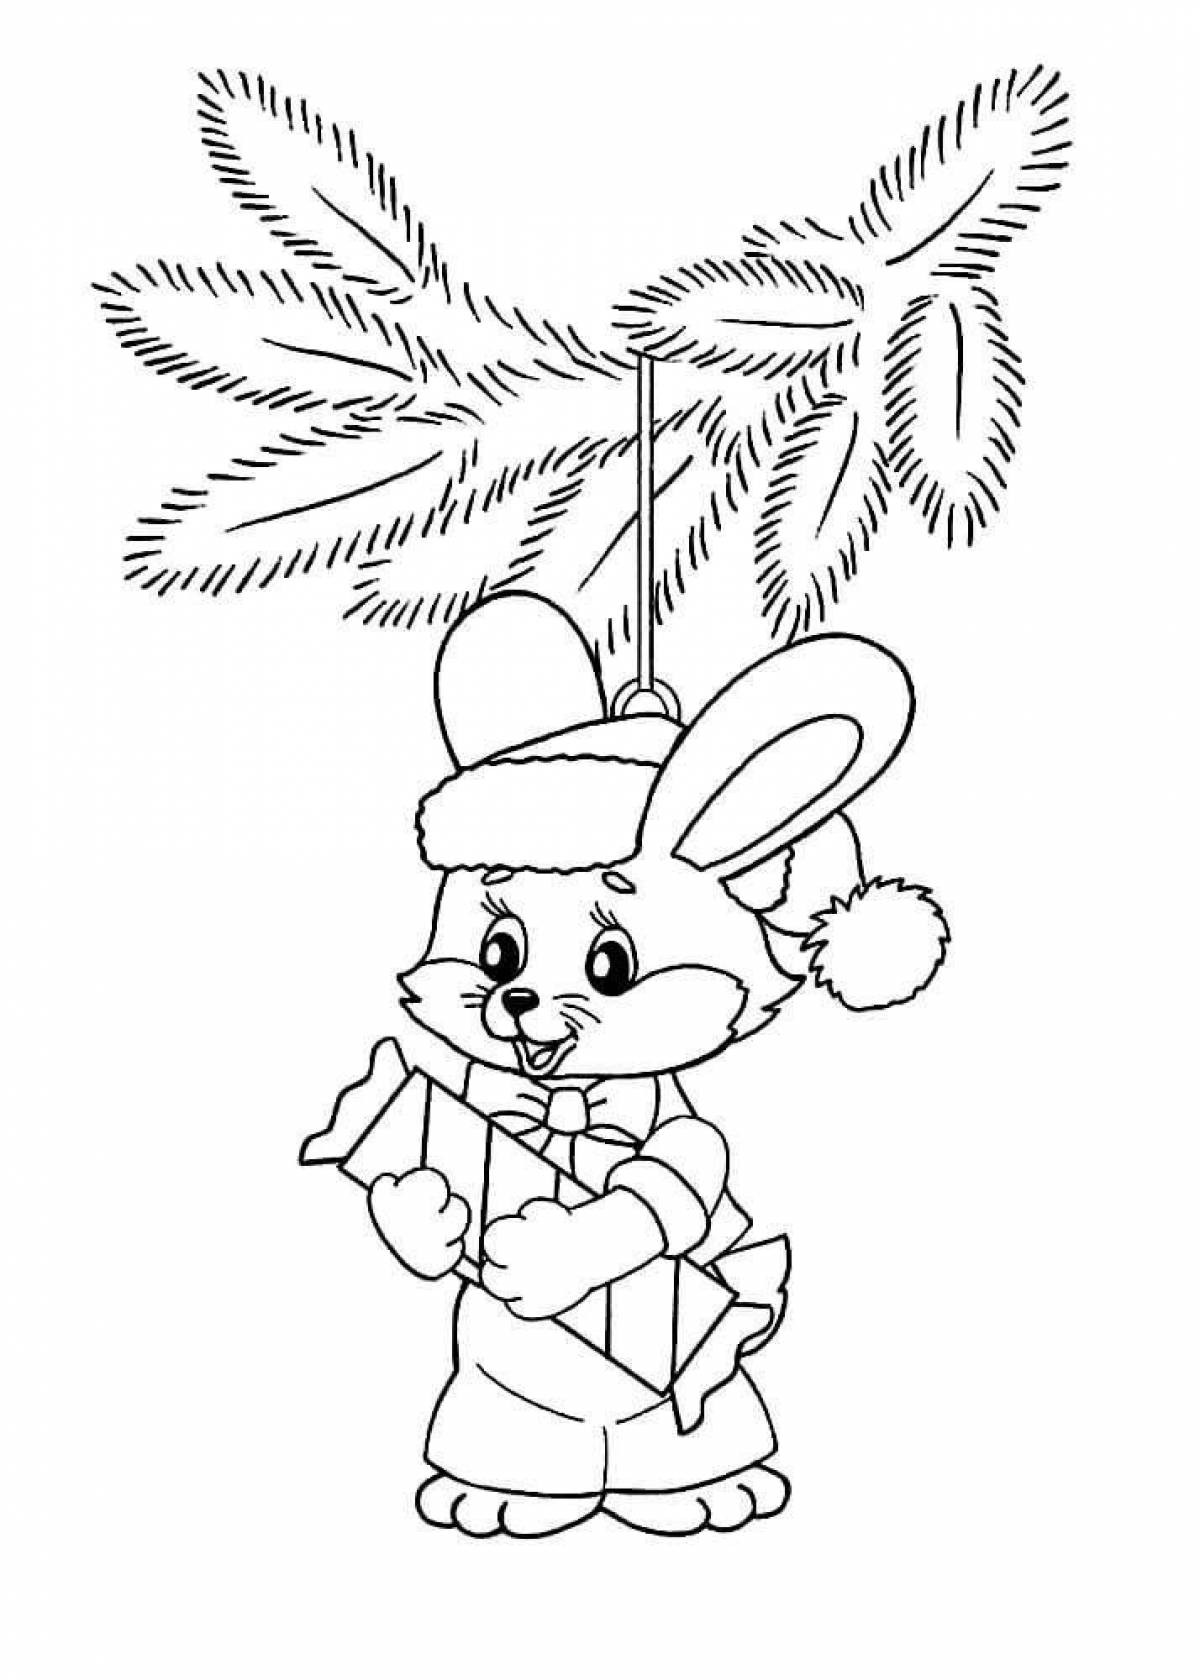 Coloring book festive Christmas Bunny